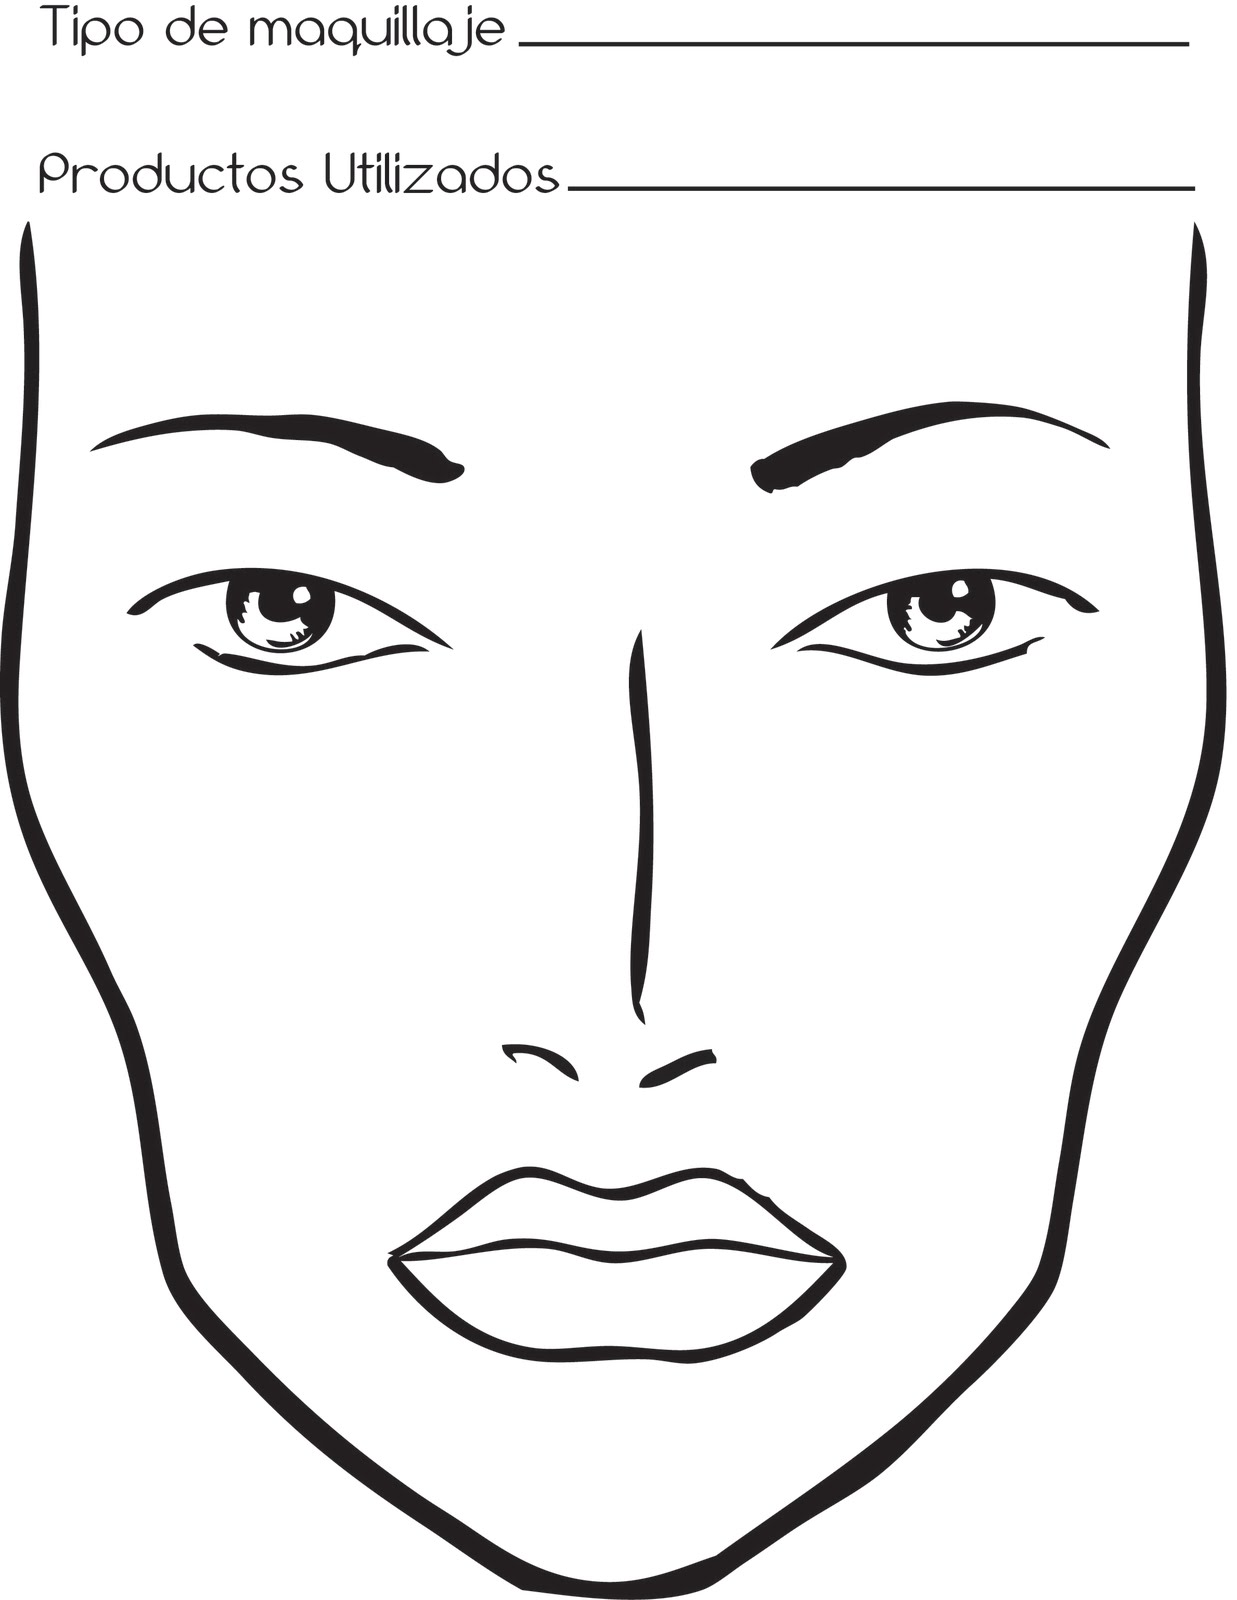 Bocetos de rostros para maquillar - Imagui